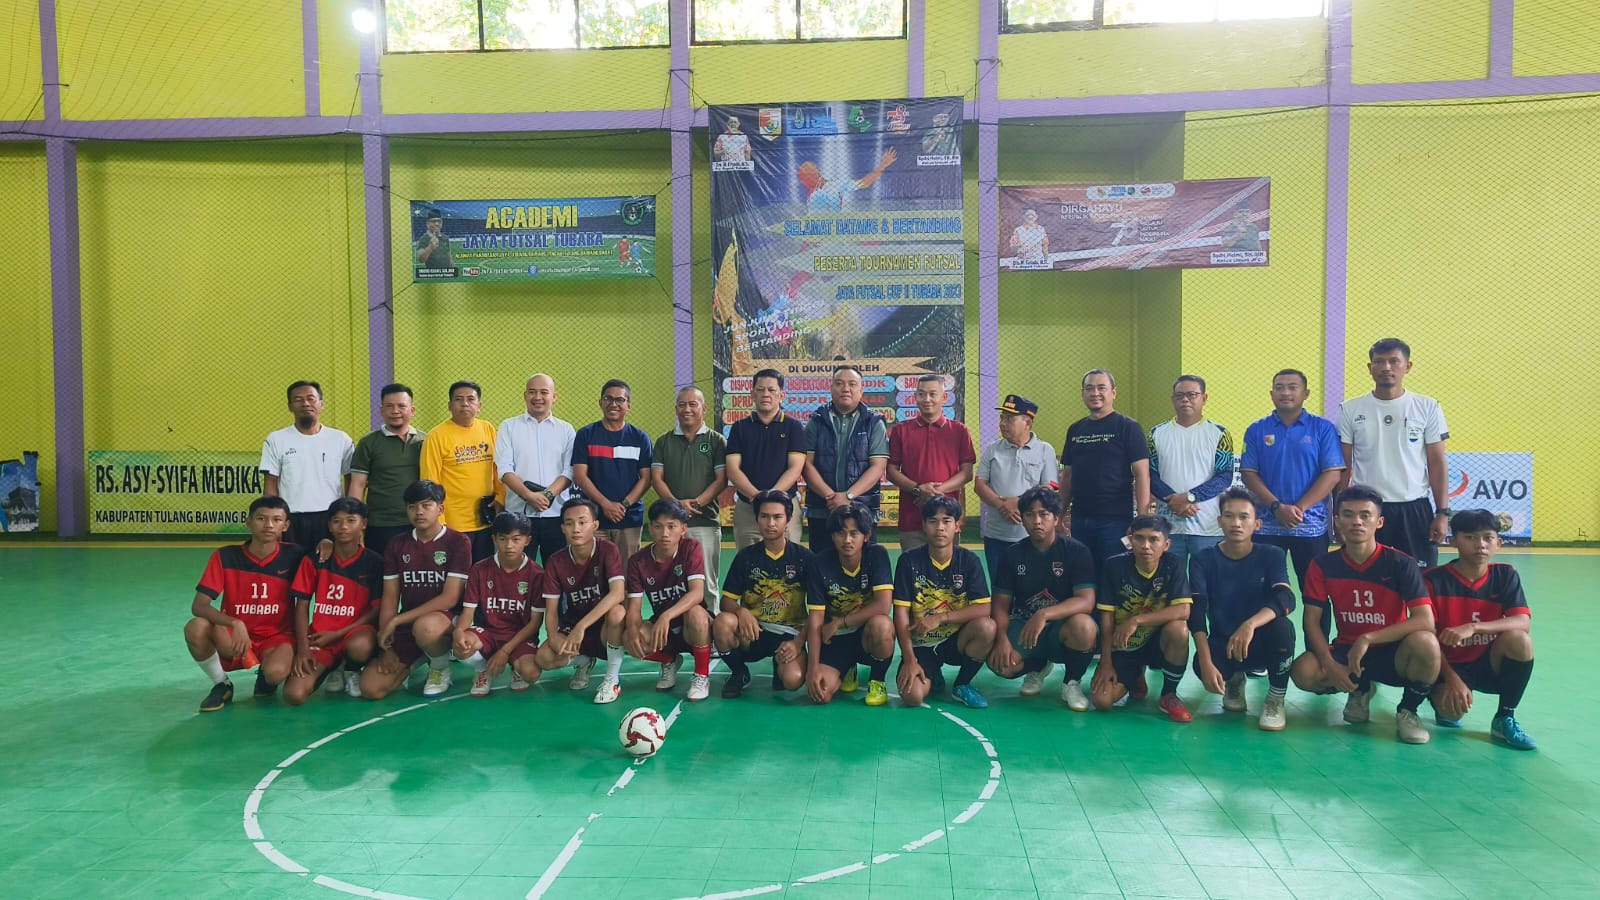 Tournamen Jaya Futsal Resmi Dibuka, Pj Bupati M. Firsada: Mens Sana In Corpore Sano